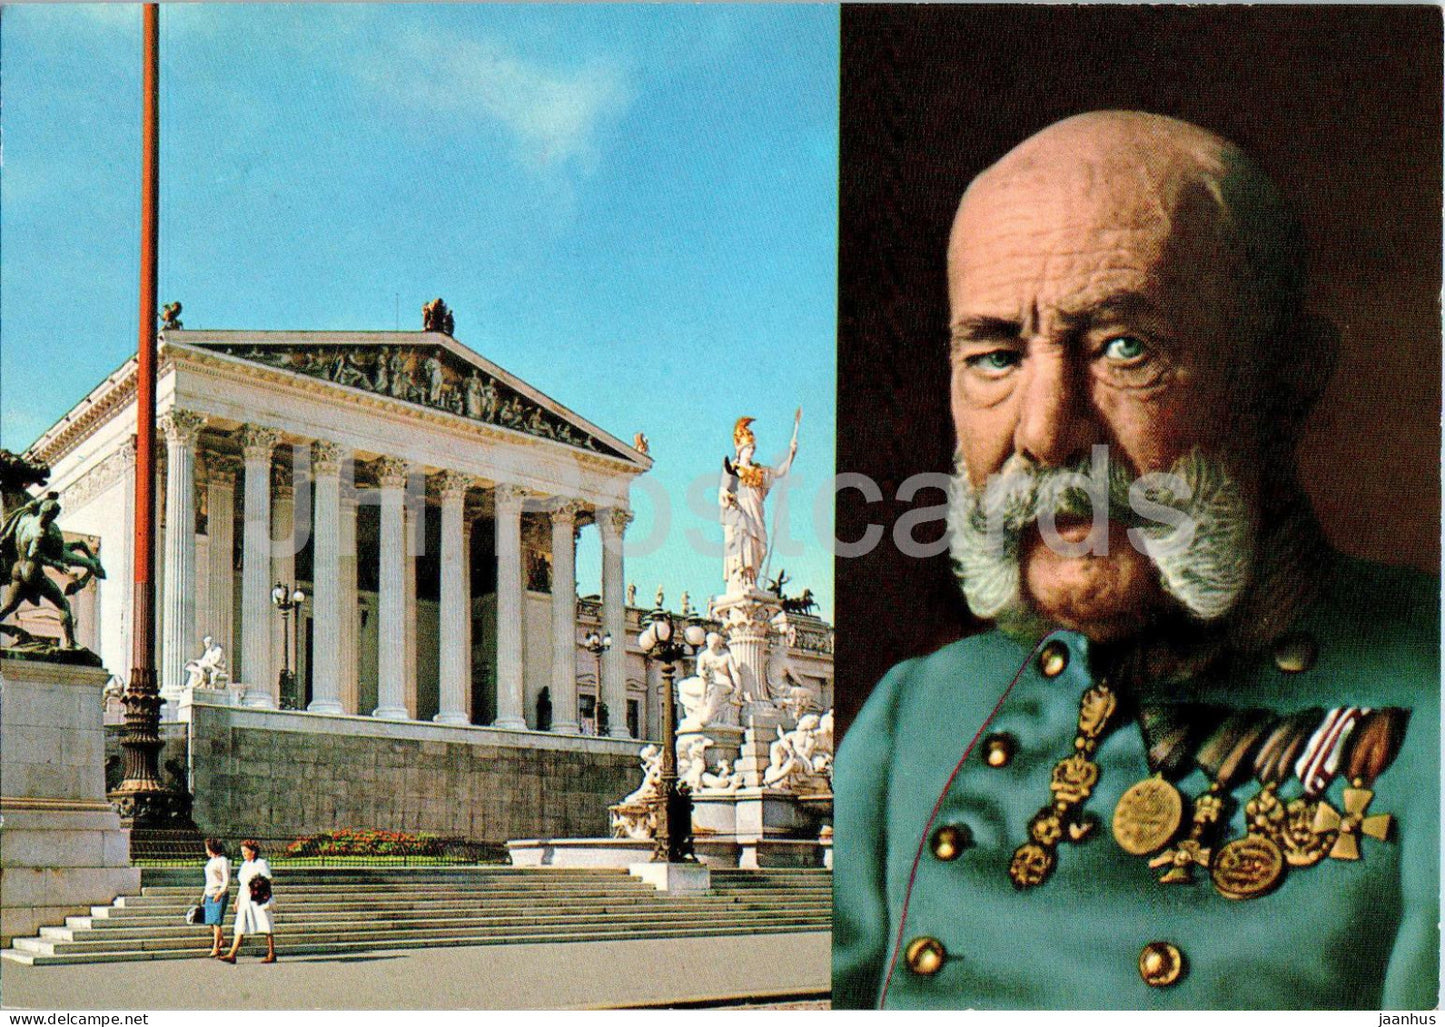 Wien - Vienna - Das Parlament - Franz Joseph I - parliament - 8/81 - 1985 - Austria - used - JH Postcards